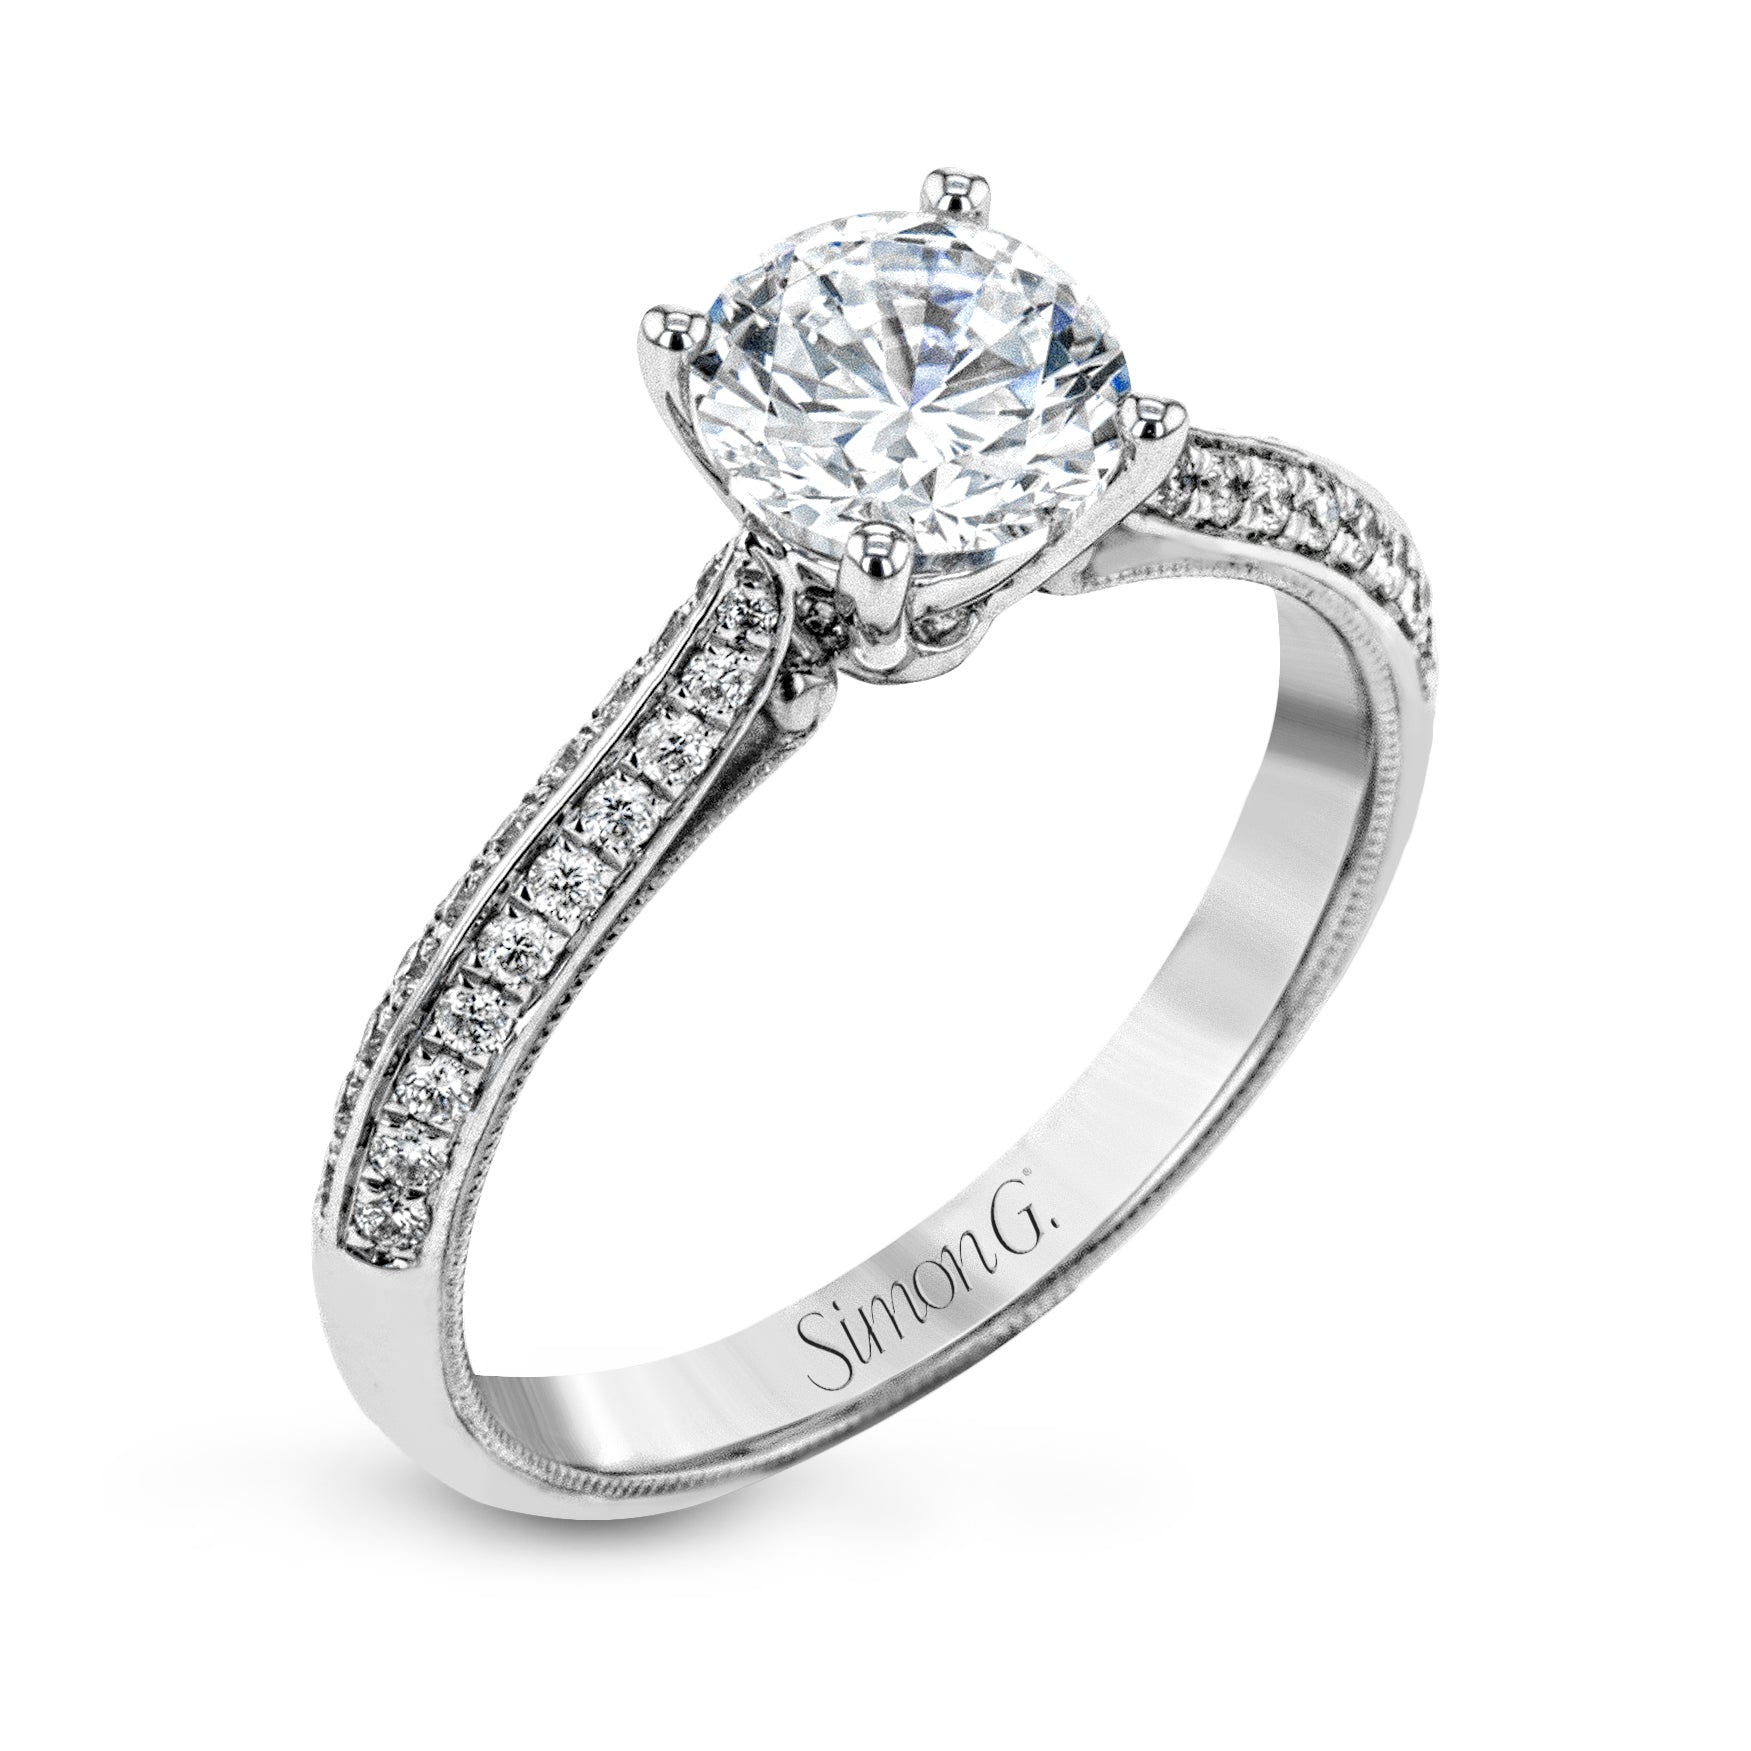 Simon G 18K Round Diamond Engagement Ring With Bombay Diamond Shank